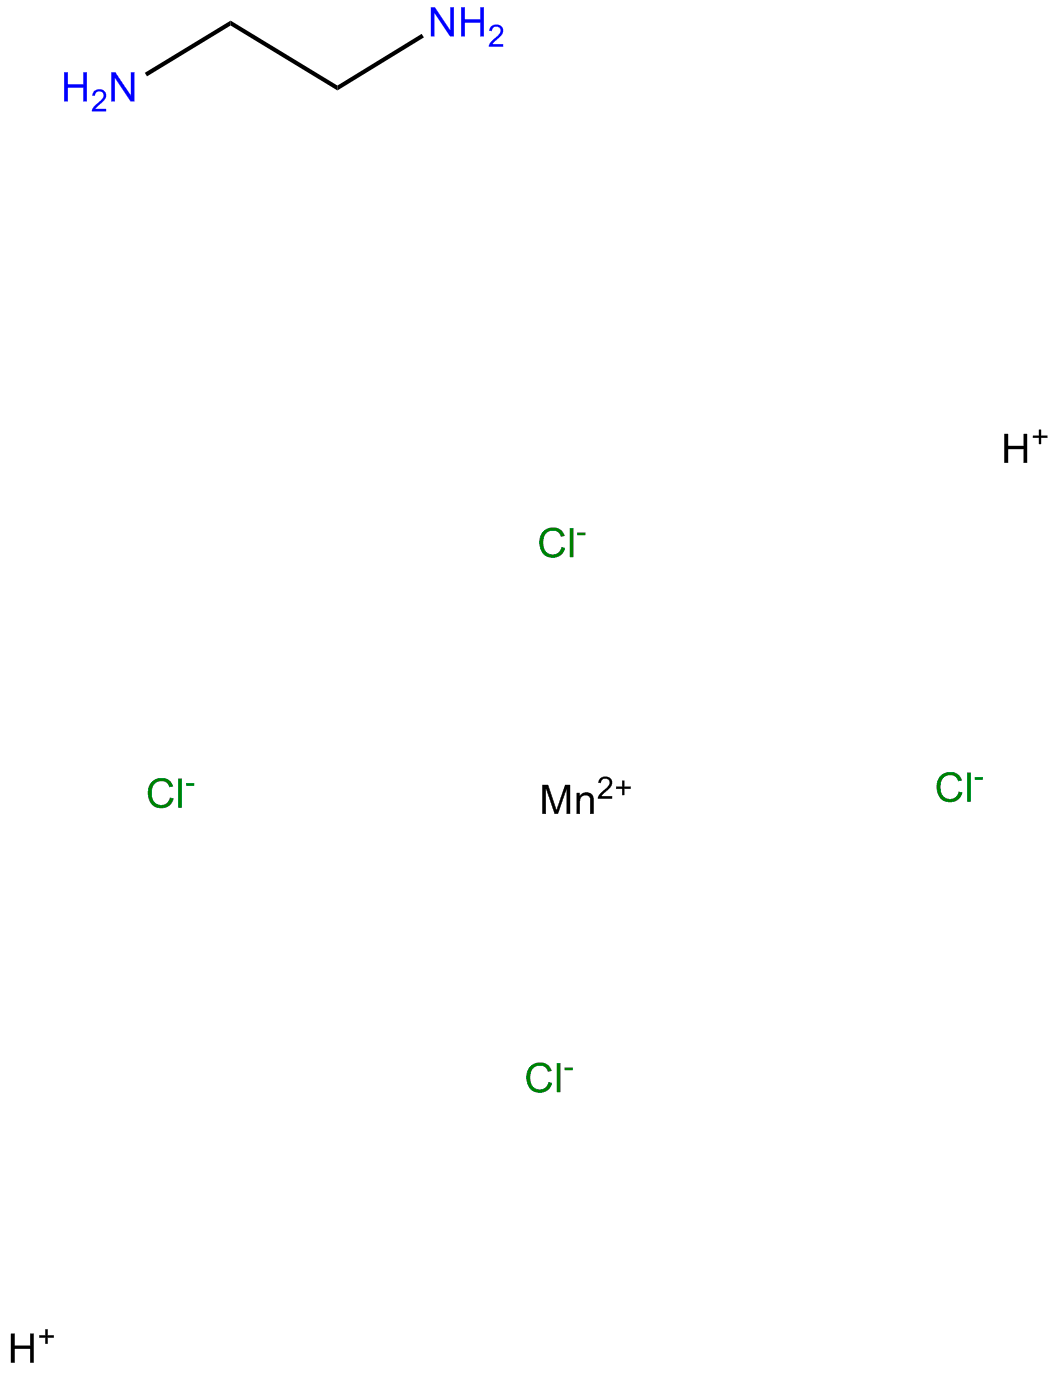 Image of propyldiammonium manganese tetrachloride